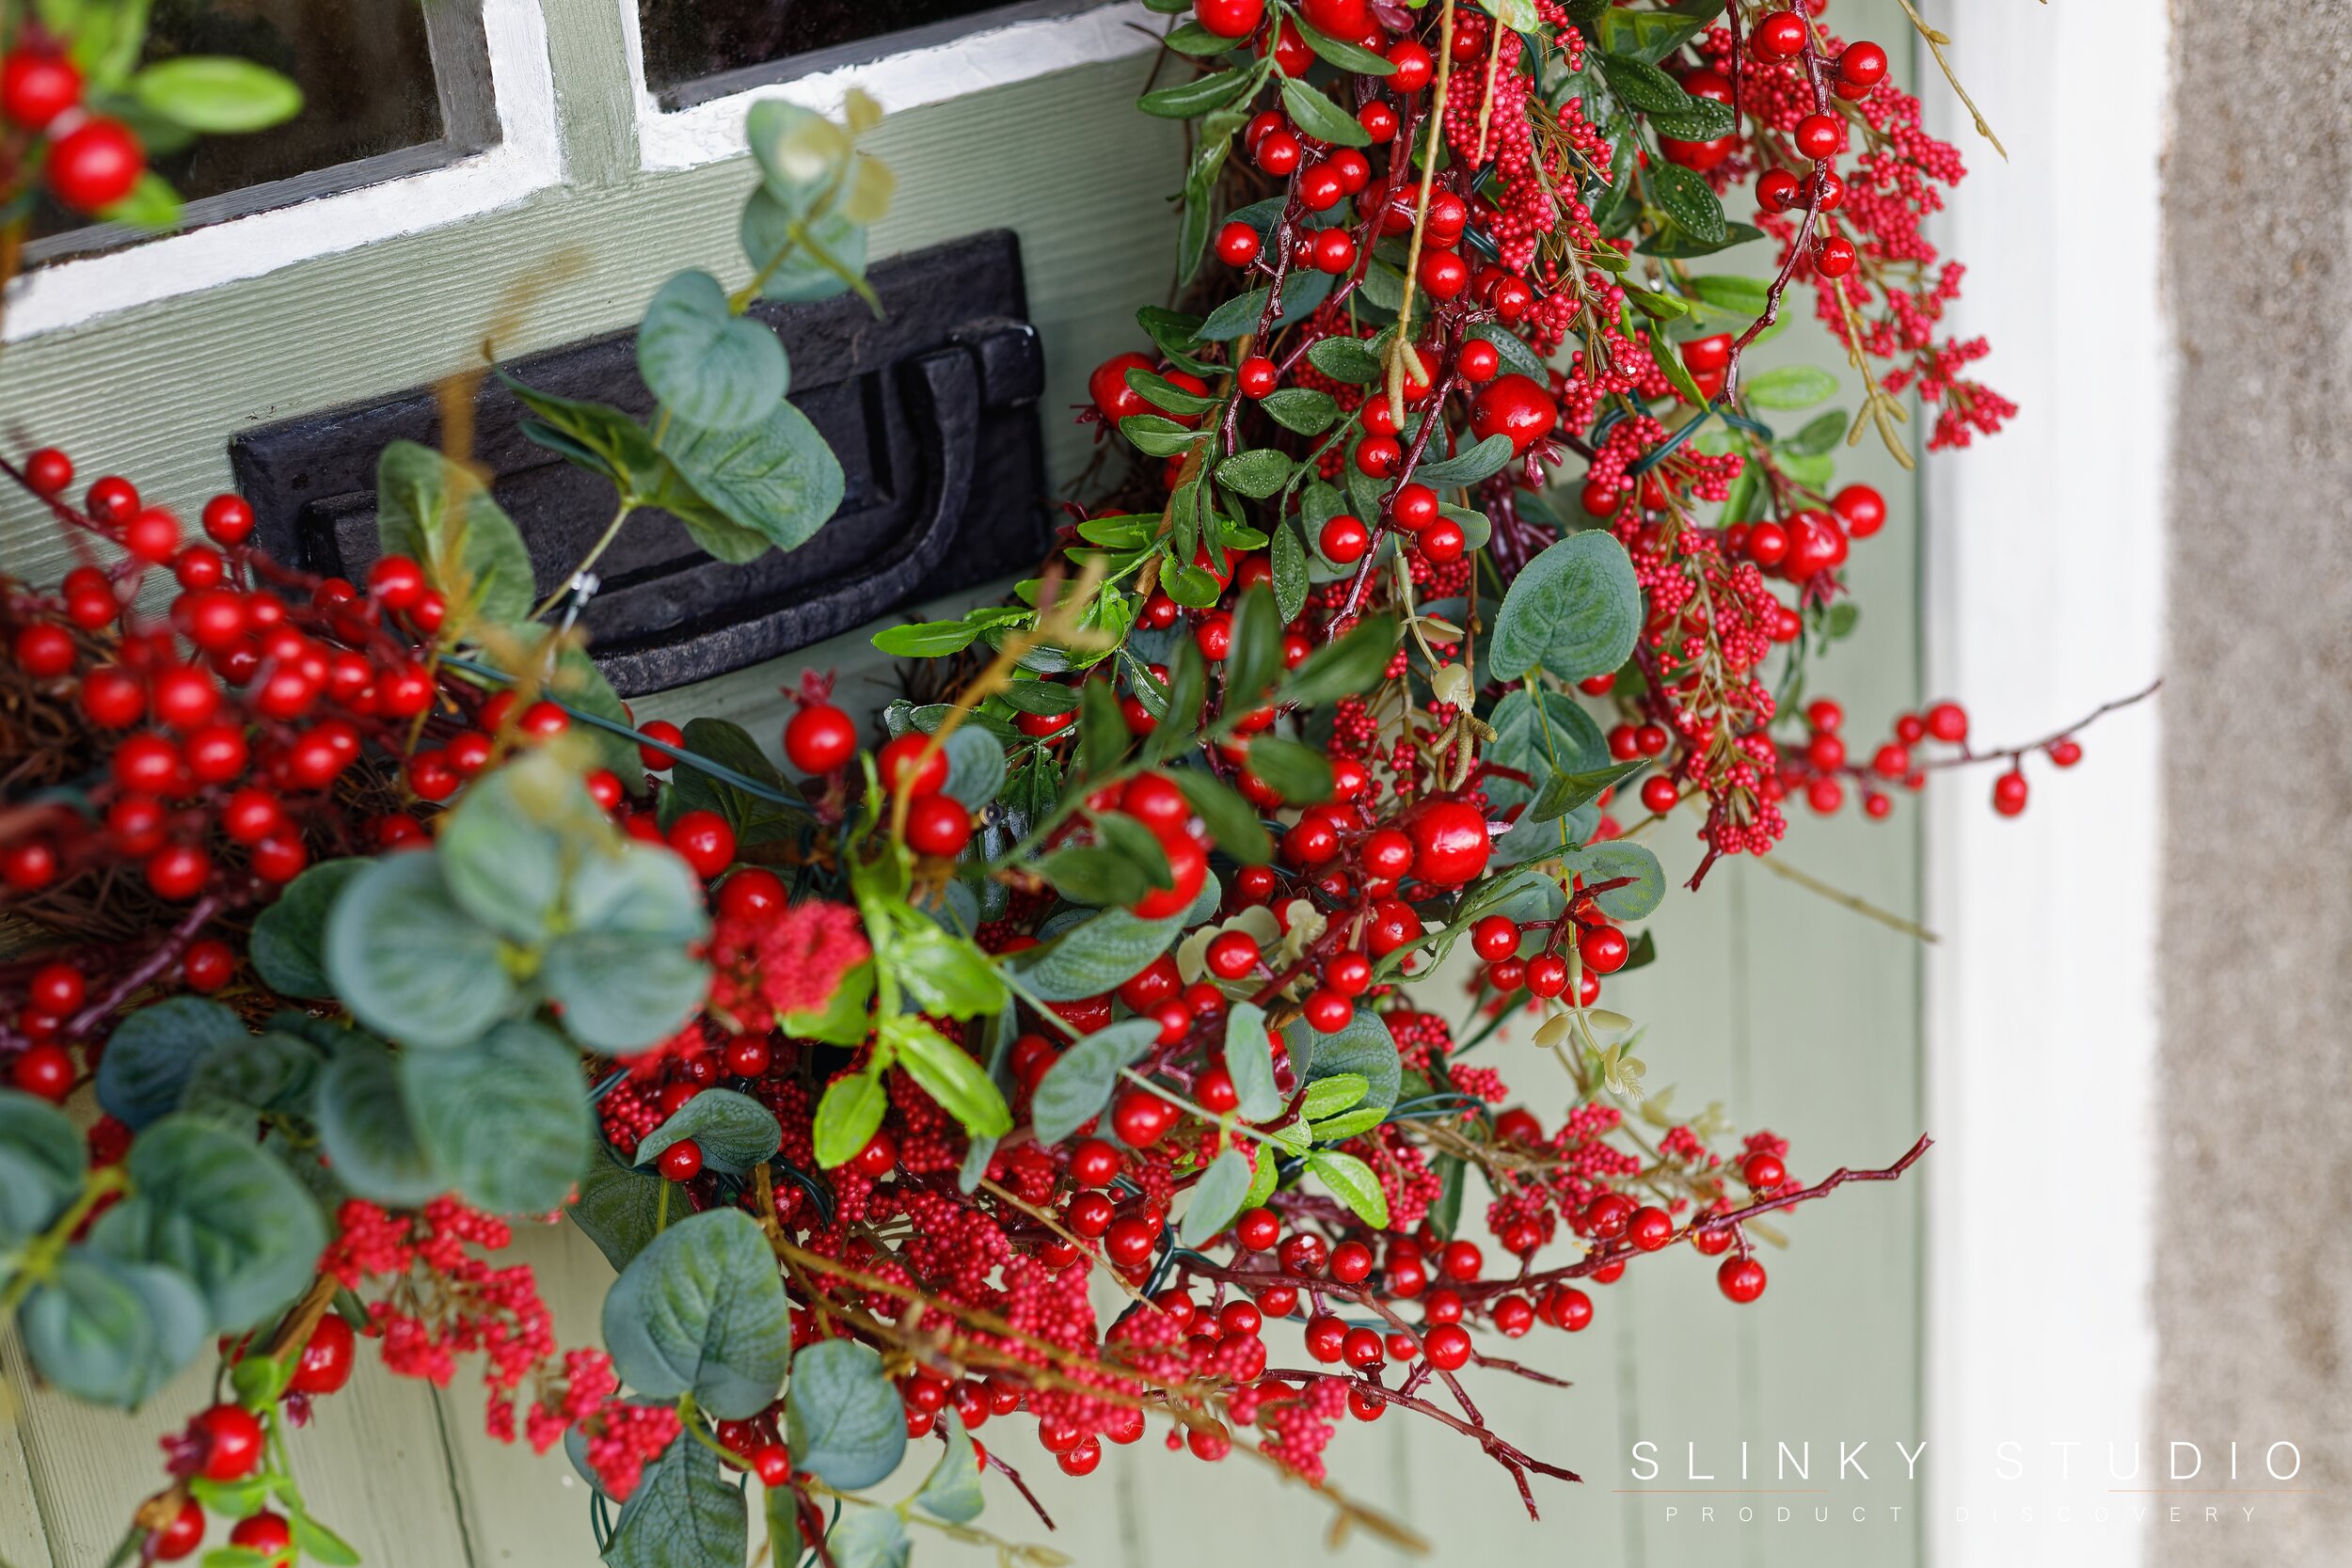 Balsam Hill Mixed Berry Festive Wreath Hanging on Door.jpg